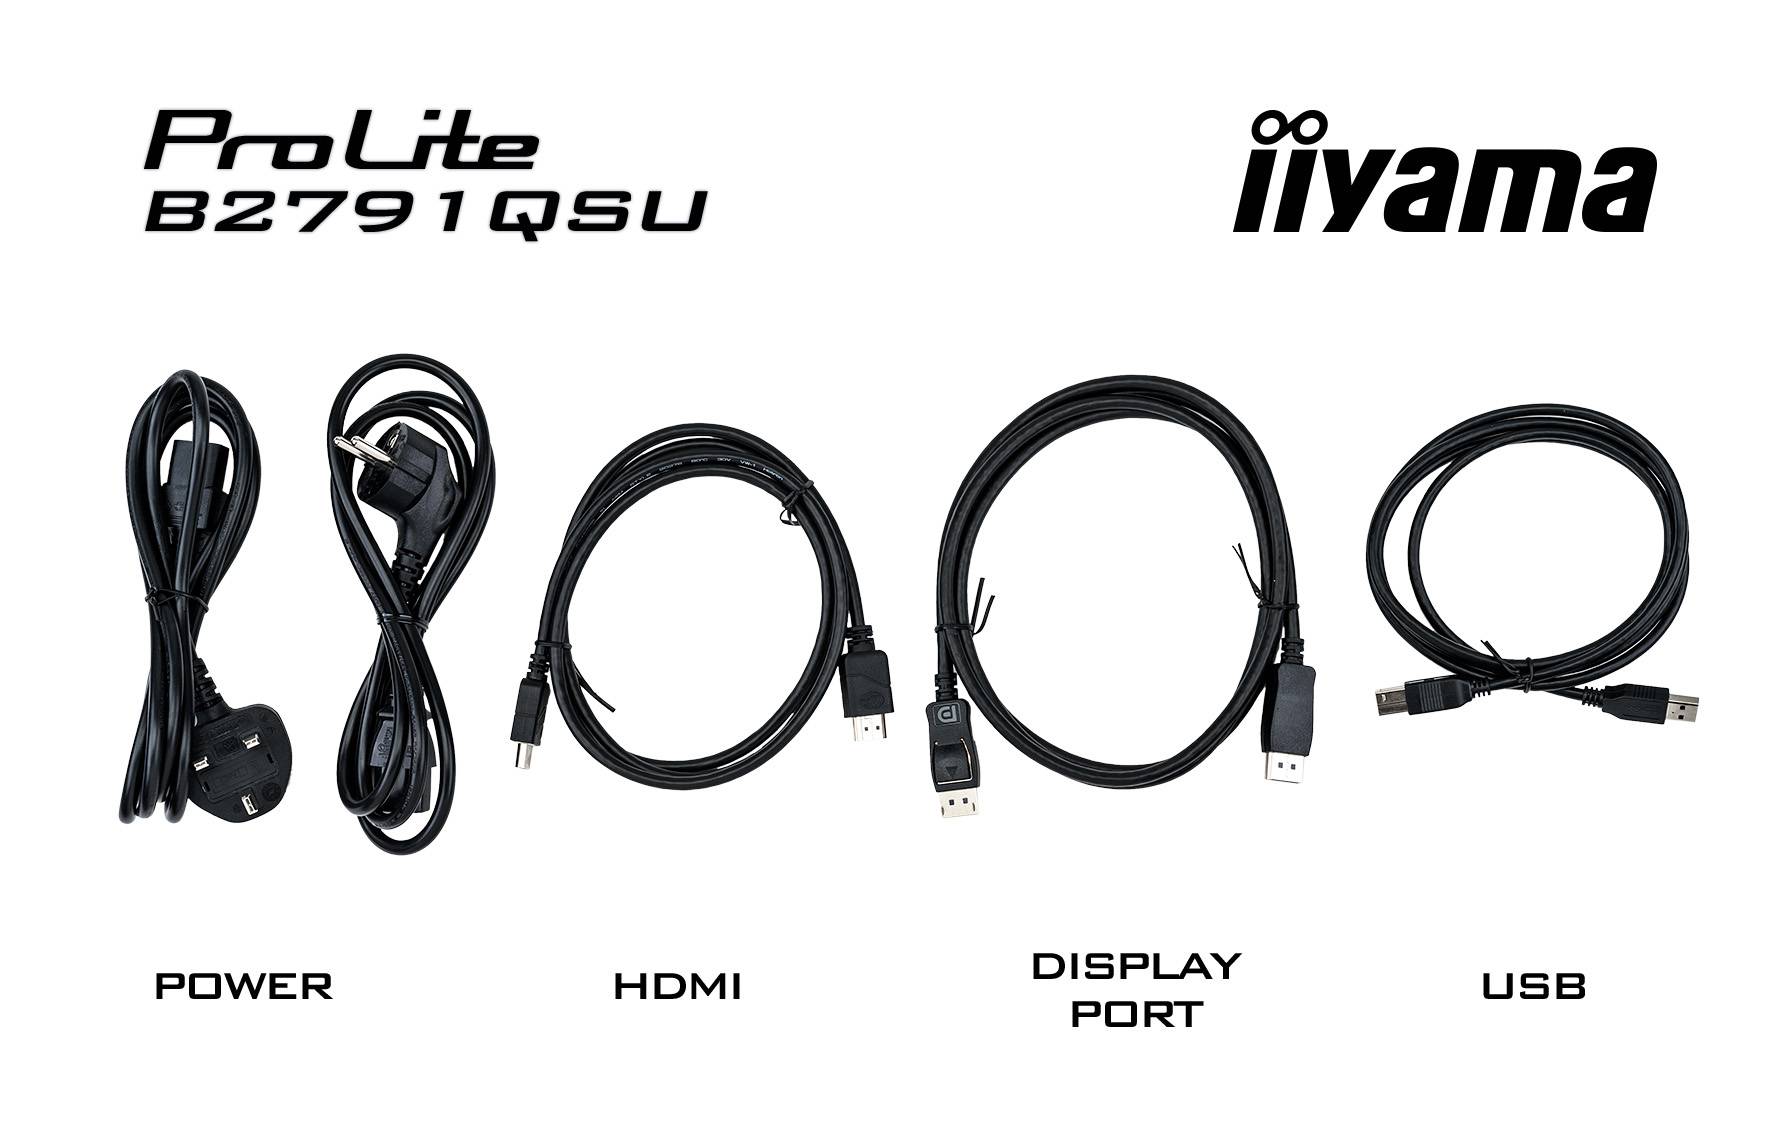 Rca Informatique - image du produit : B2791QSU-B1 1000:1 DVI HDMI DP 27IN LCD 2560 X 1440 16:9 1MS